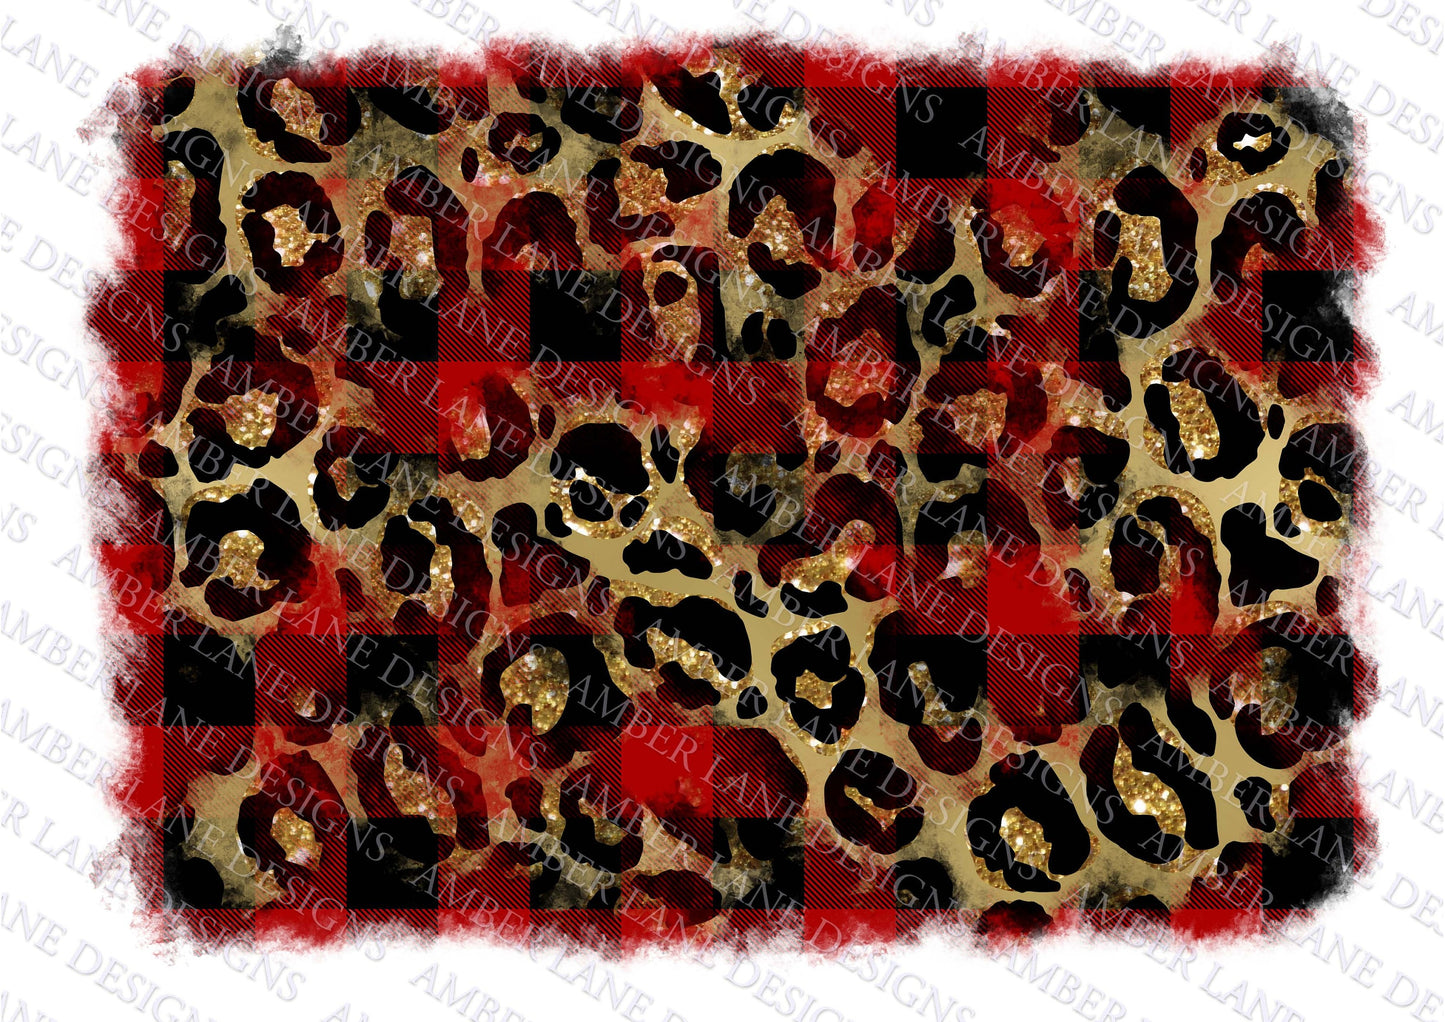 Red Buffalo plaid and Gold leopard glitter grunge, backsplash frame ,png file only